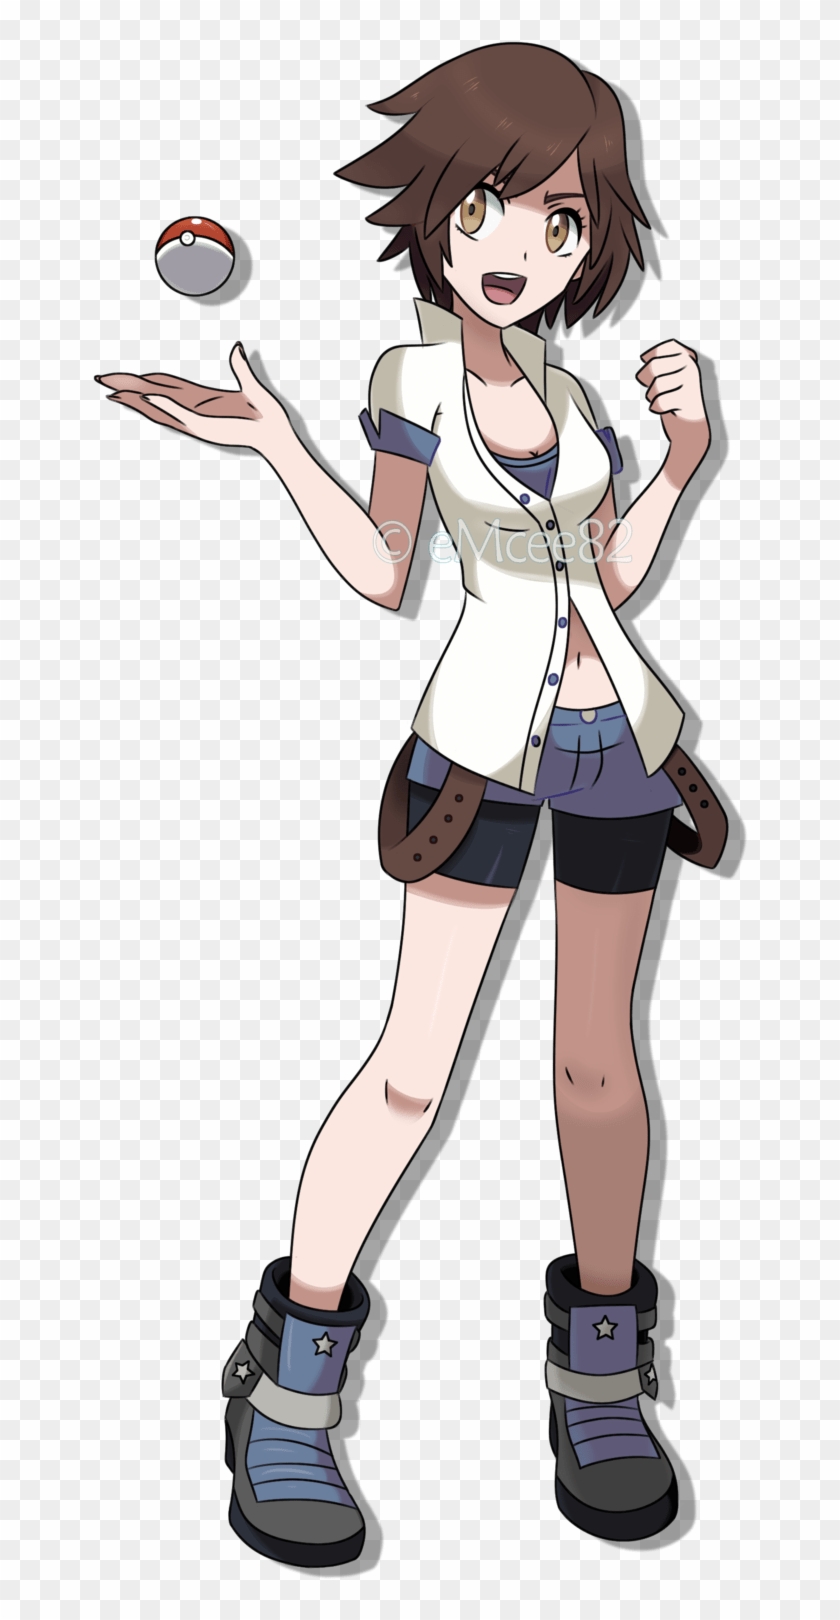 Female Pokemon Trainer.